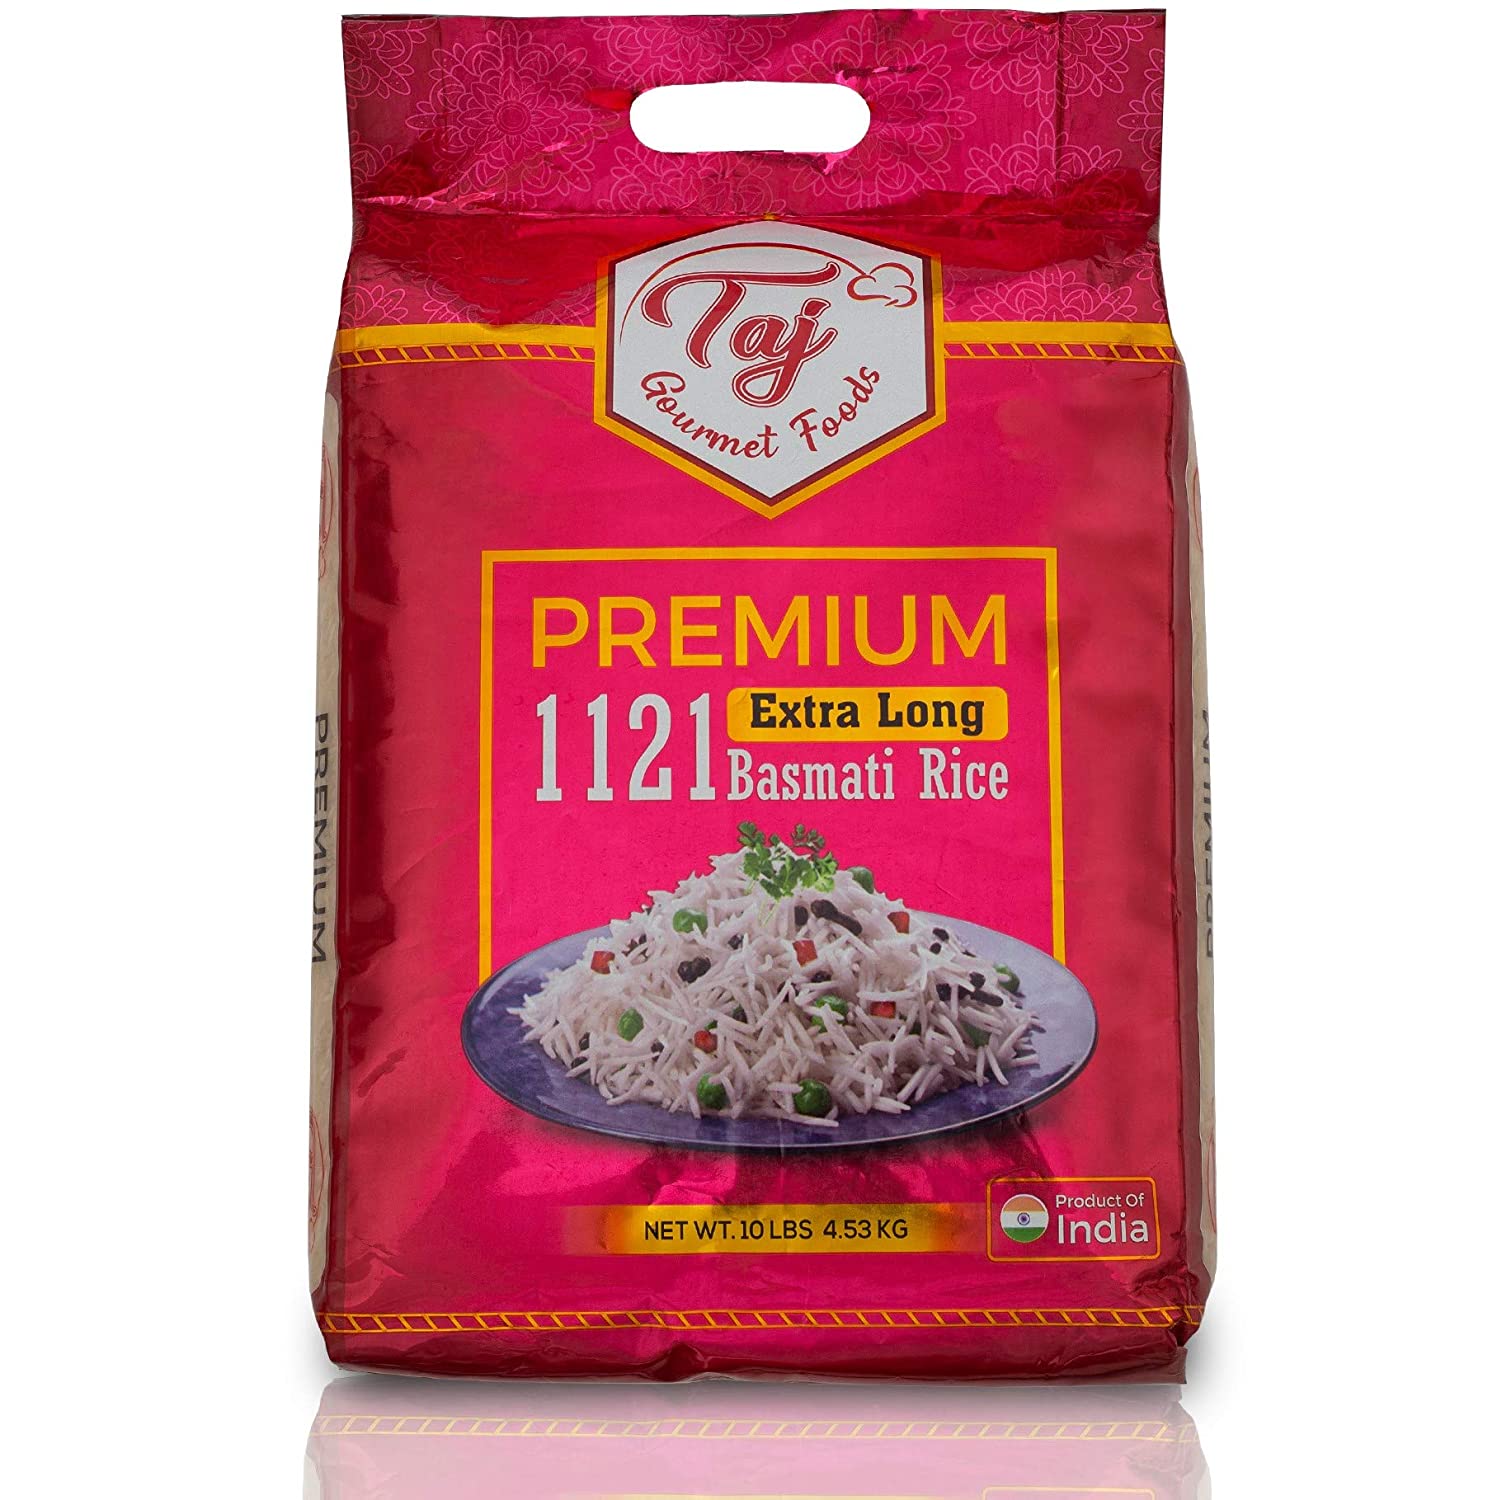 TAJ Gourmet Premium 1121 Indian Basmati Rice, Extra Long Grain, 10-Pounds - image 1 of 5